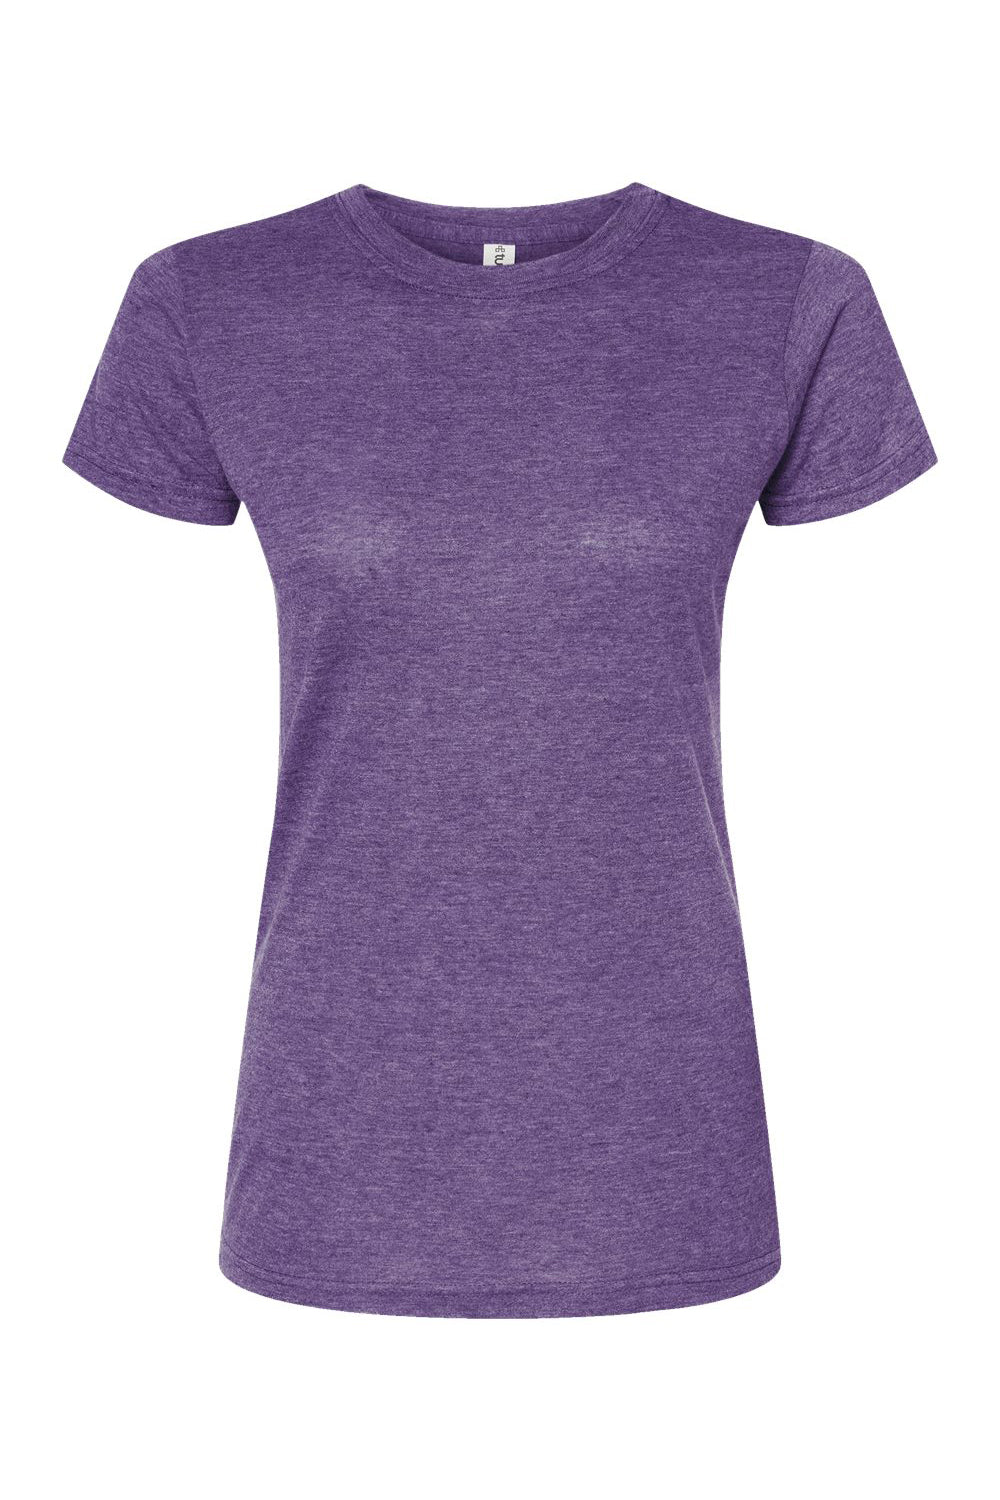 Tultex 240 Womens Poly-Rich Short Sleeve Crewneck T-Shirt Heather Purple Flat Front